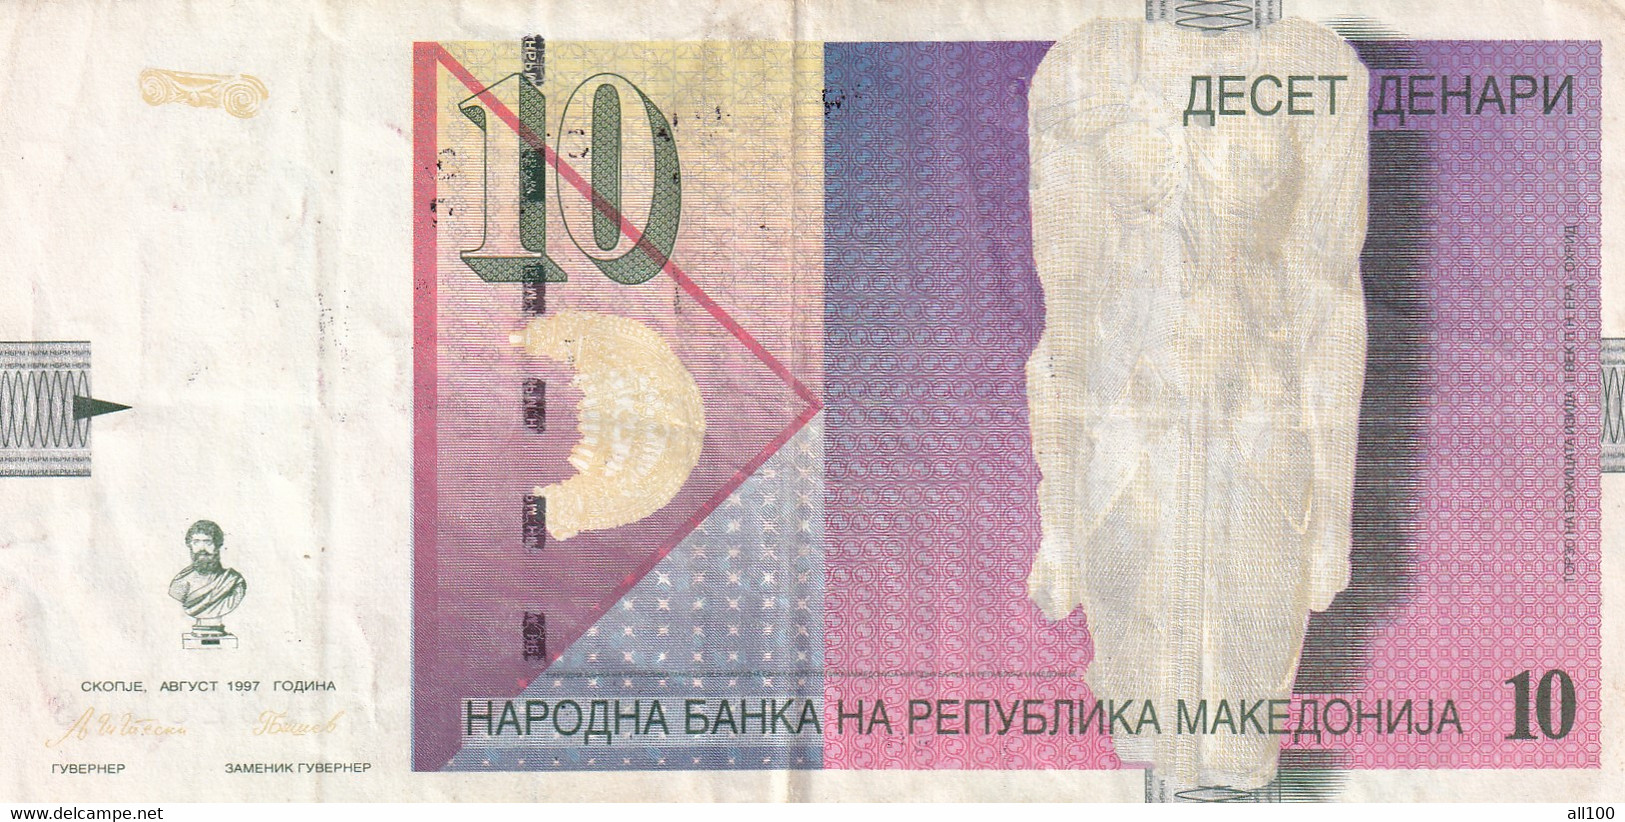 10 DENAR DECET DENARS TEN DENARS MACEDONIA 1997 NATIONAL BANK OF THE REPUBLIC OF MACEDONIA 626808 - Macedonia Del Nord